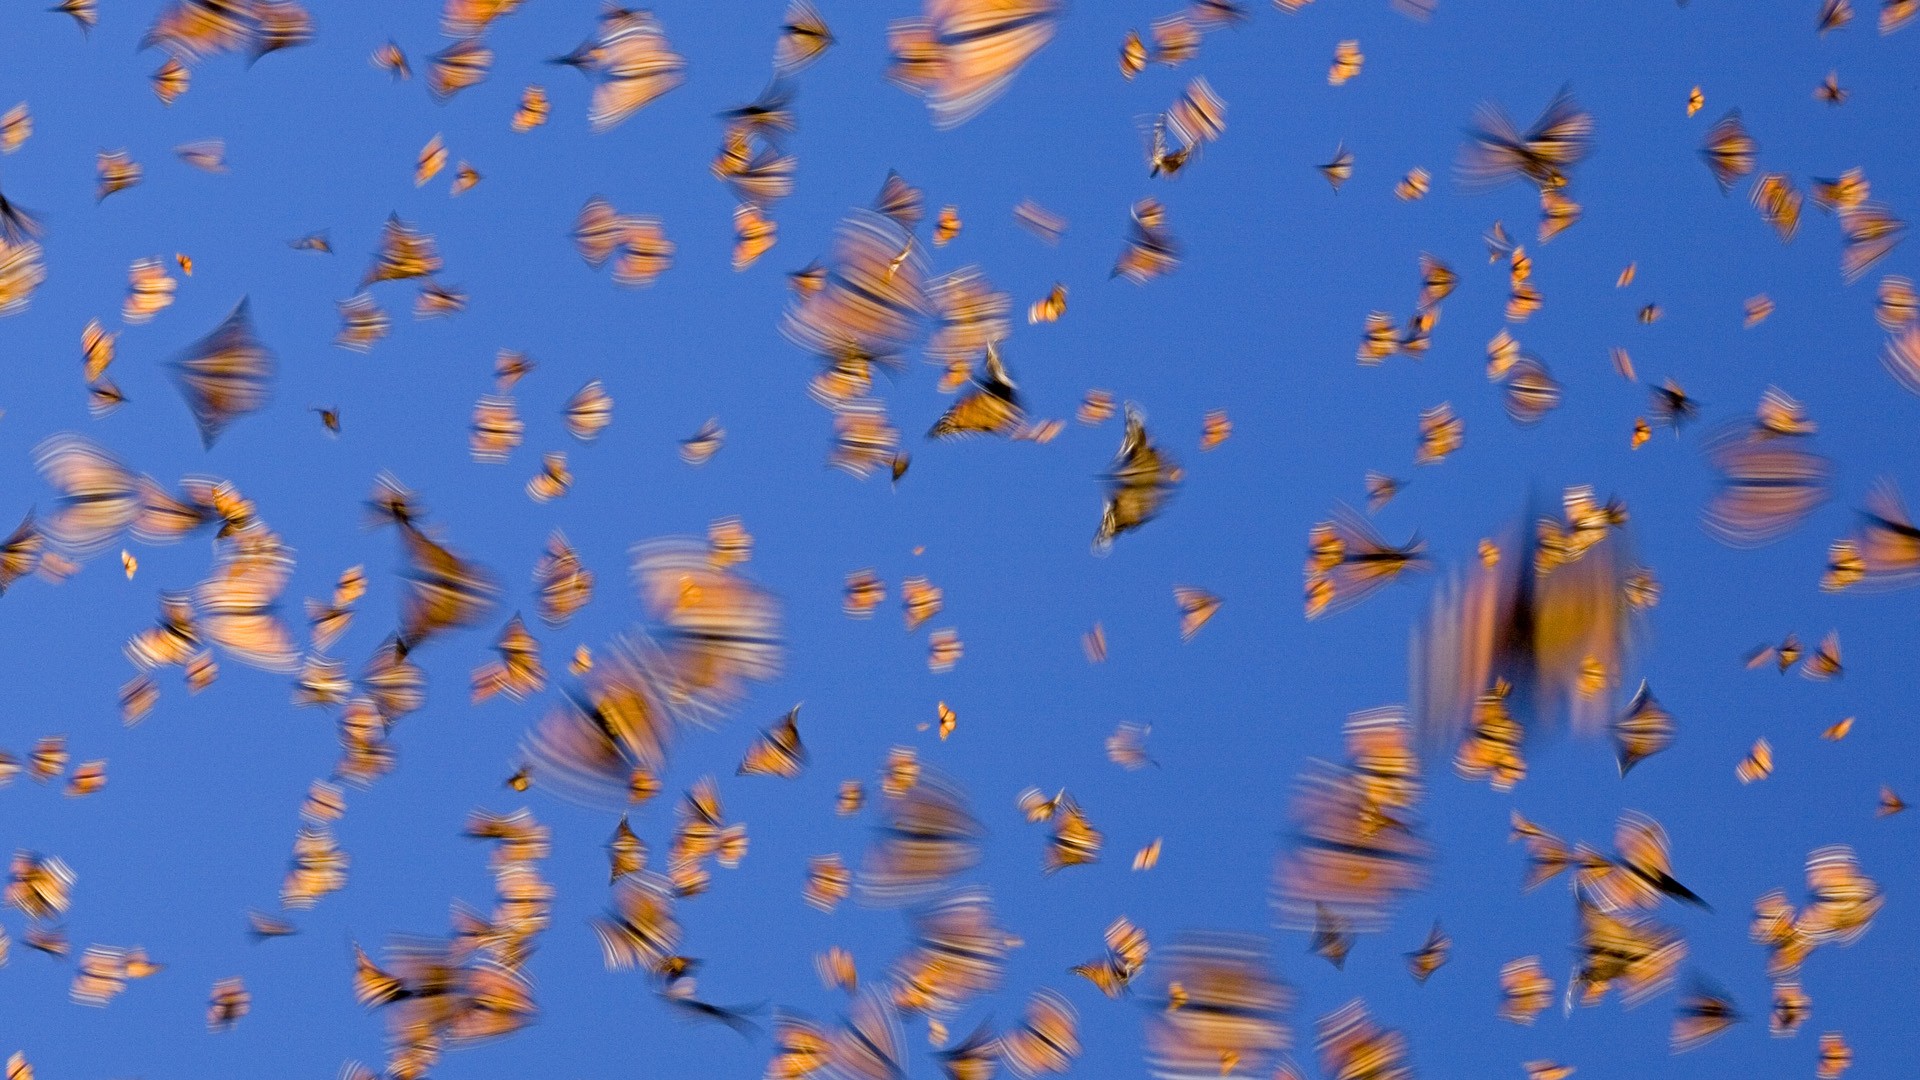 Бабочек легкая стая. Инго Арндт бабочка. Много бабочек. Стая бабочек. Много летающих бабочек.